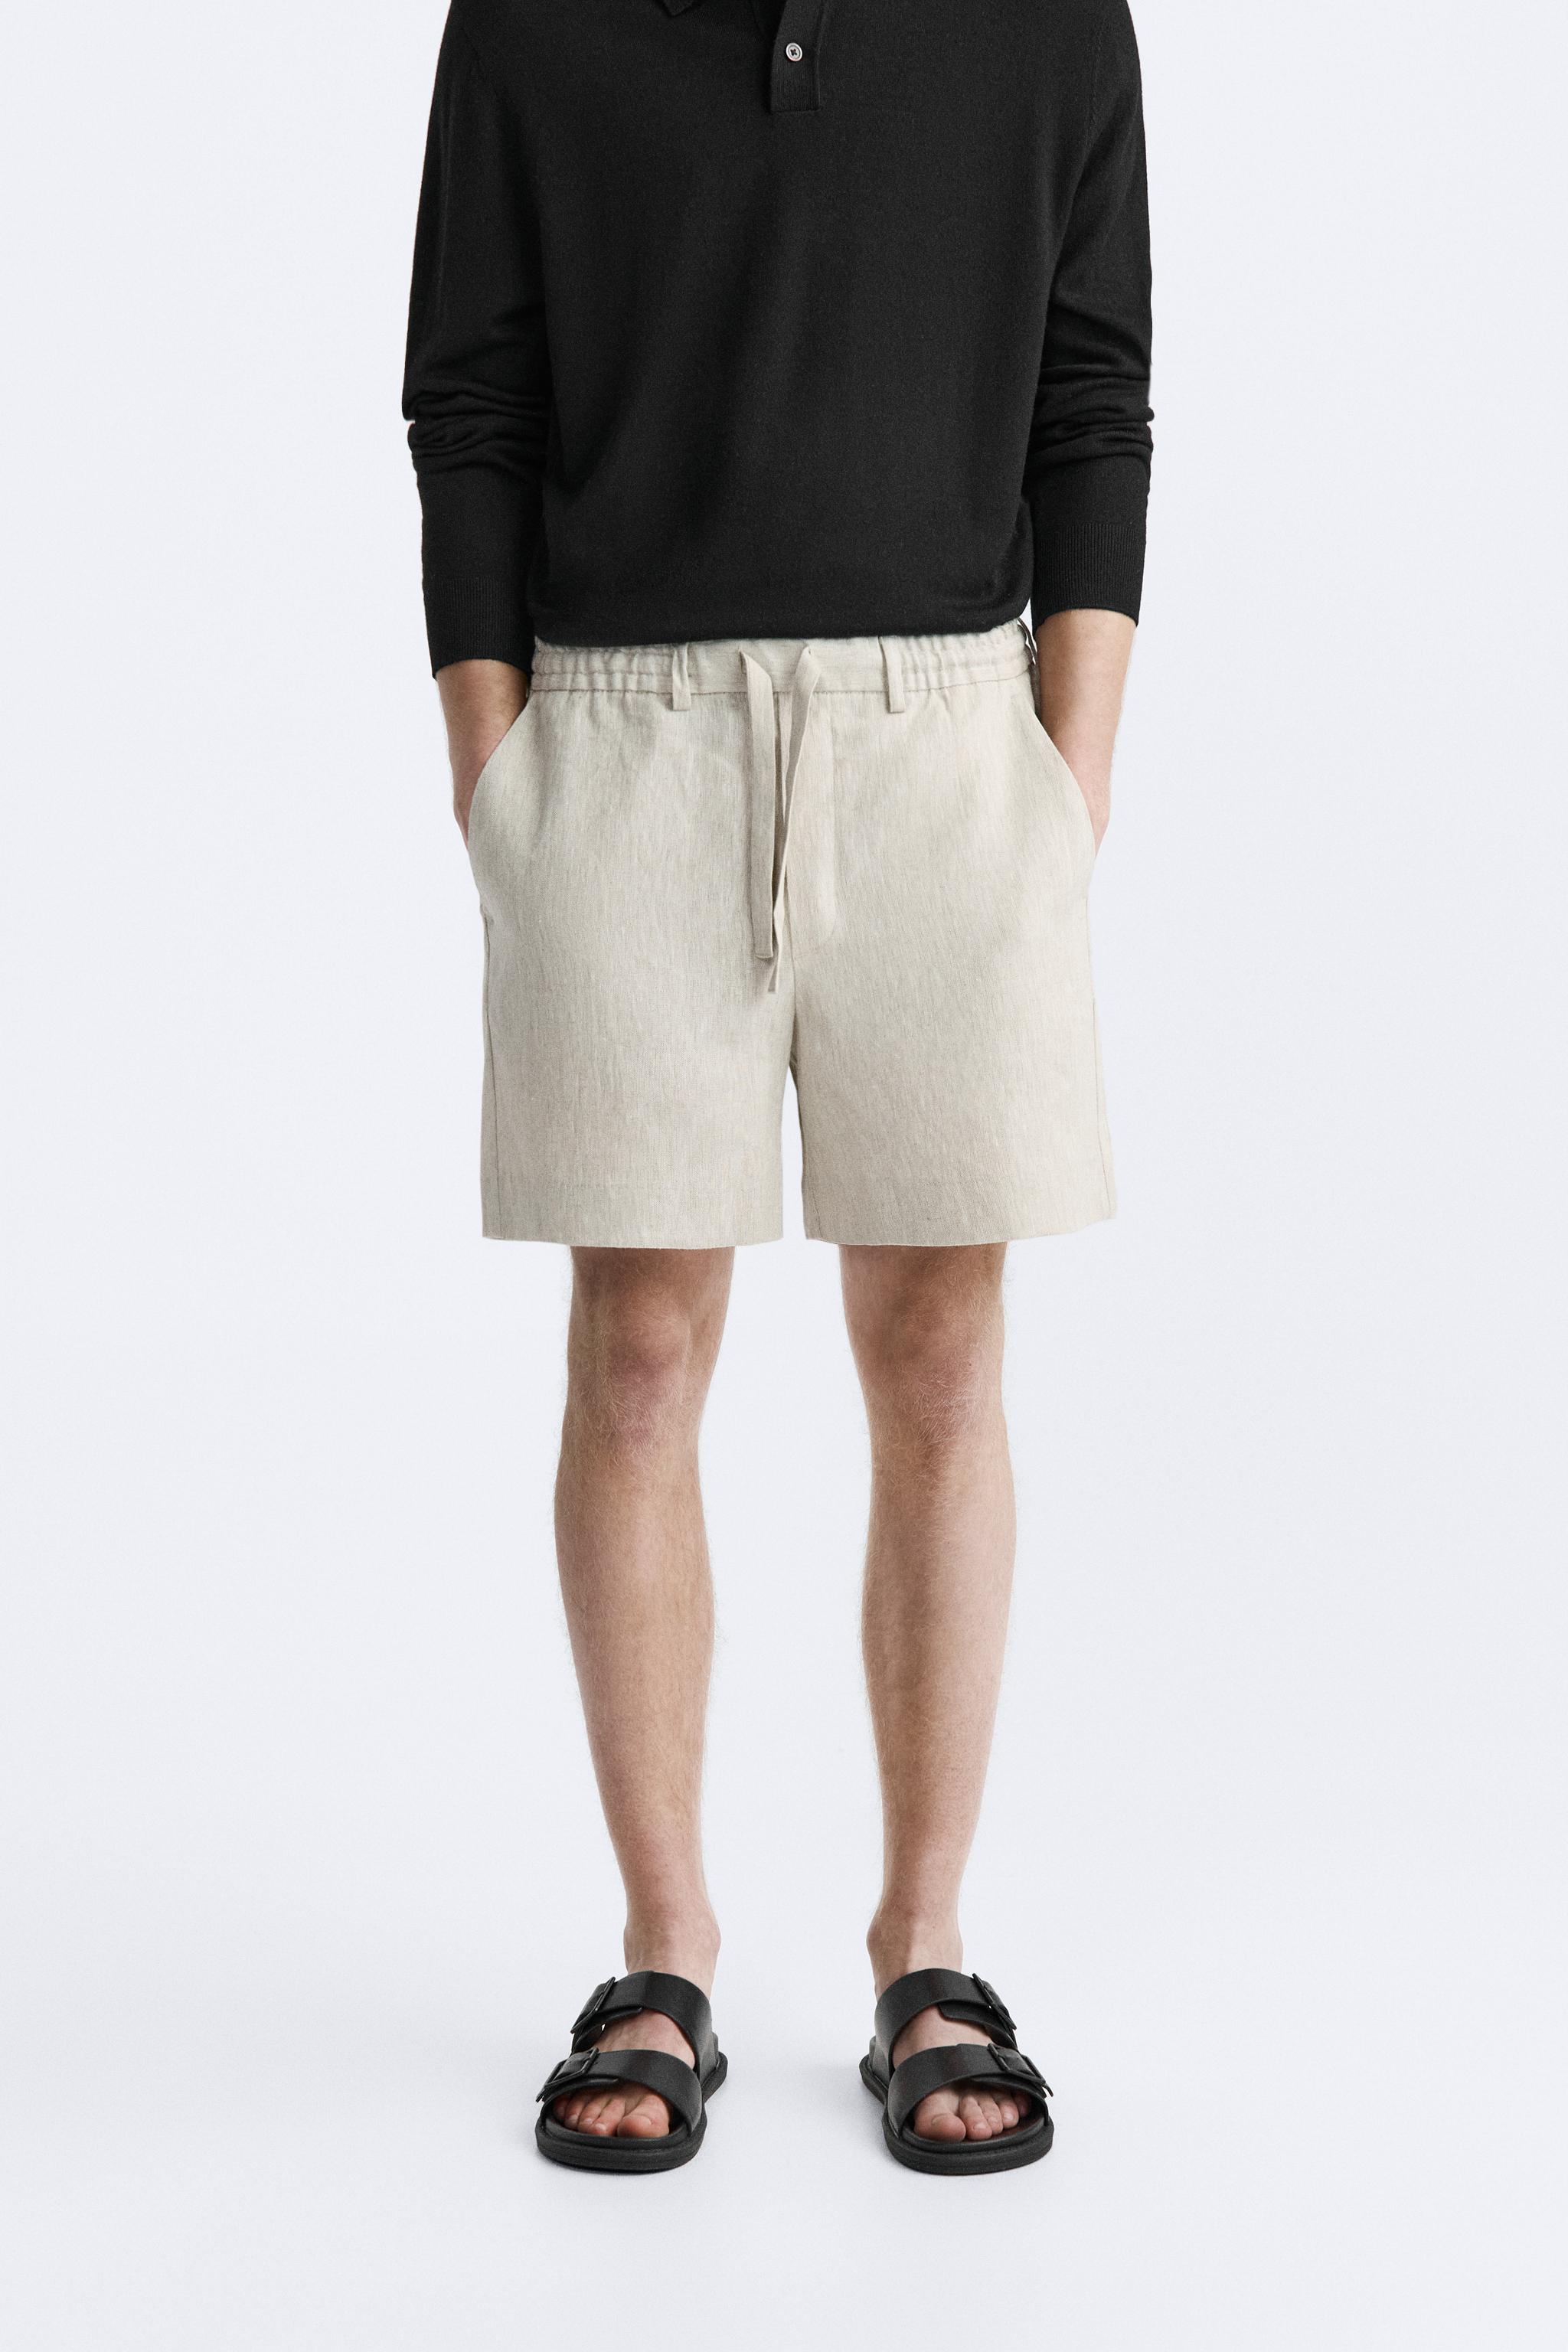 White Linen Deluxe Shorts,organic Linen Shorts Men,& Linen Mens